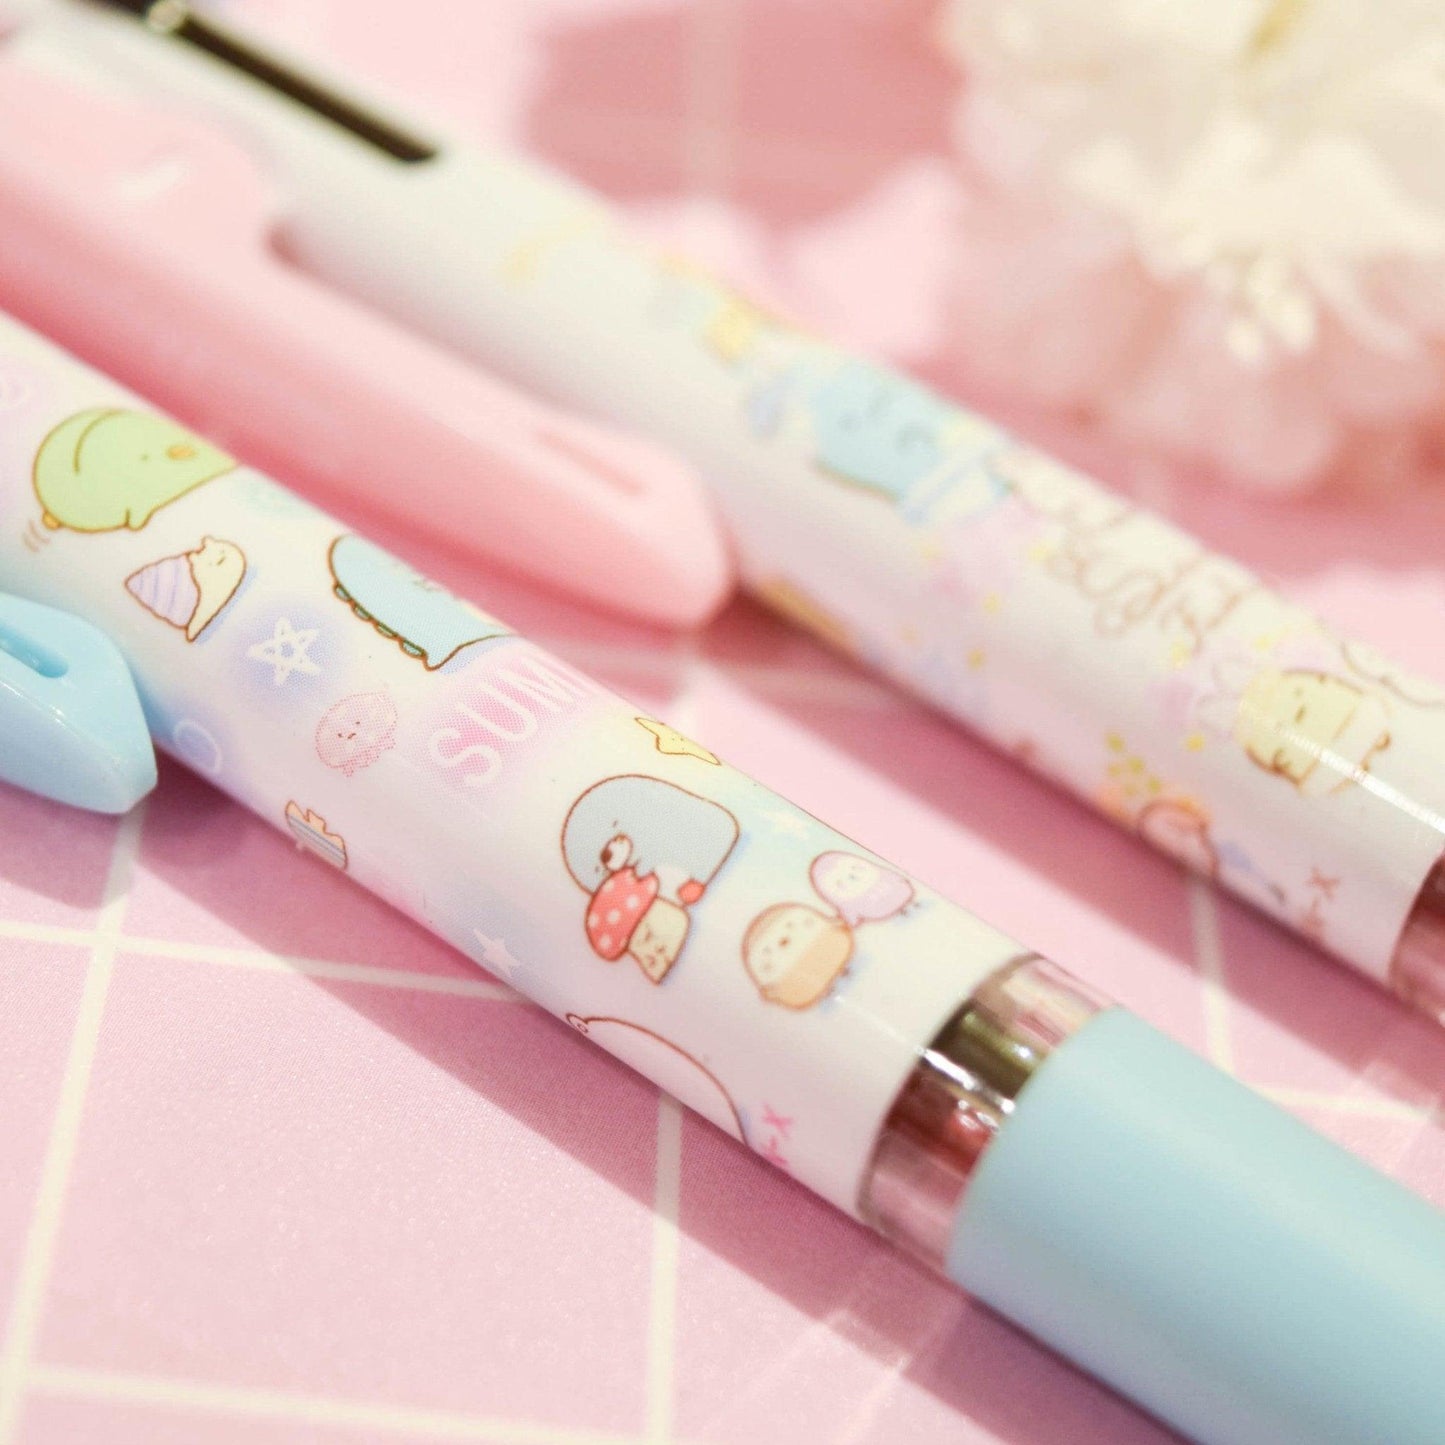 SAN-X UNI JETSTREAM PR0240 0.5MM Sumikko Gurashi 3 Color Pen Oil Pen Ball Pen Pink Blue - CHL-STORE 